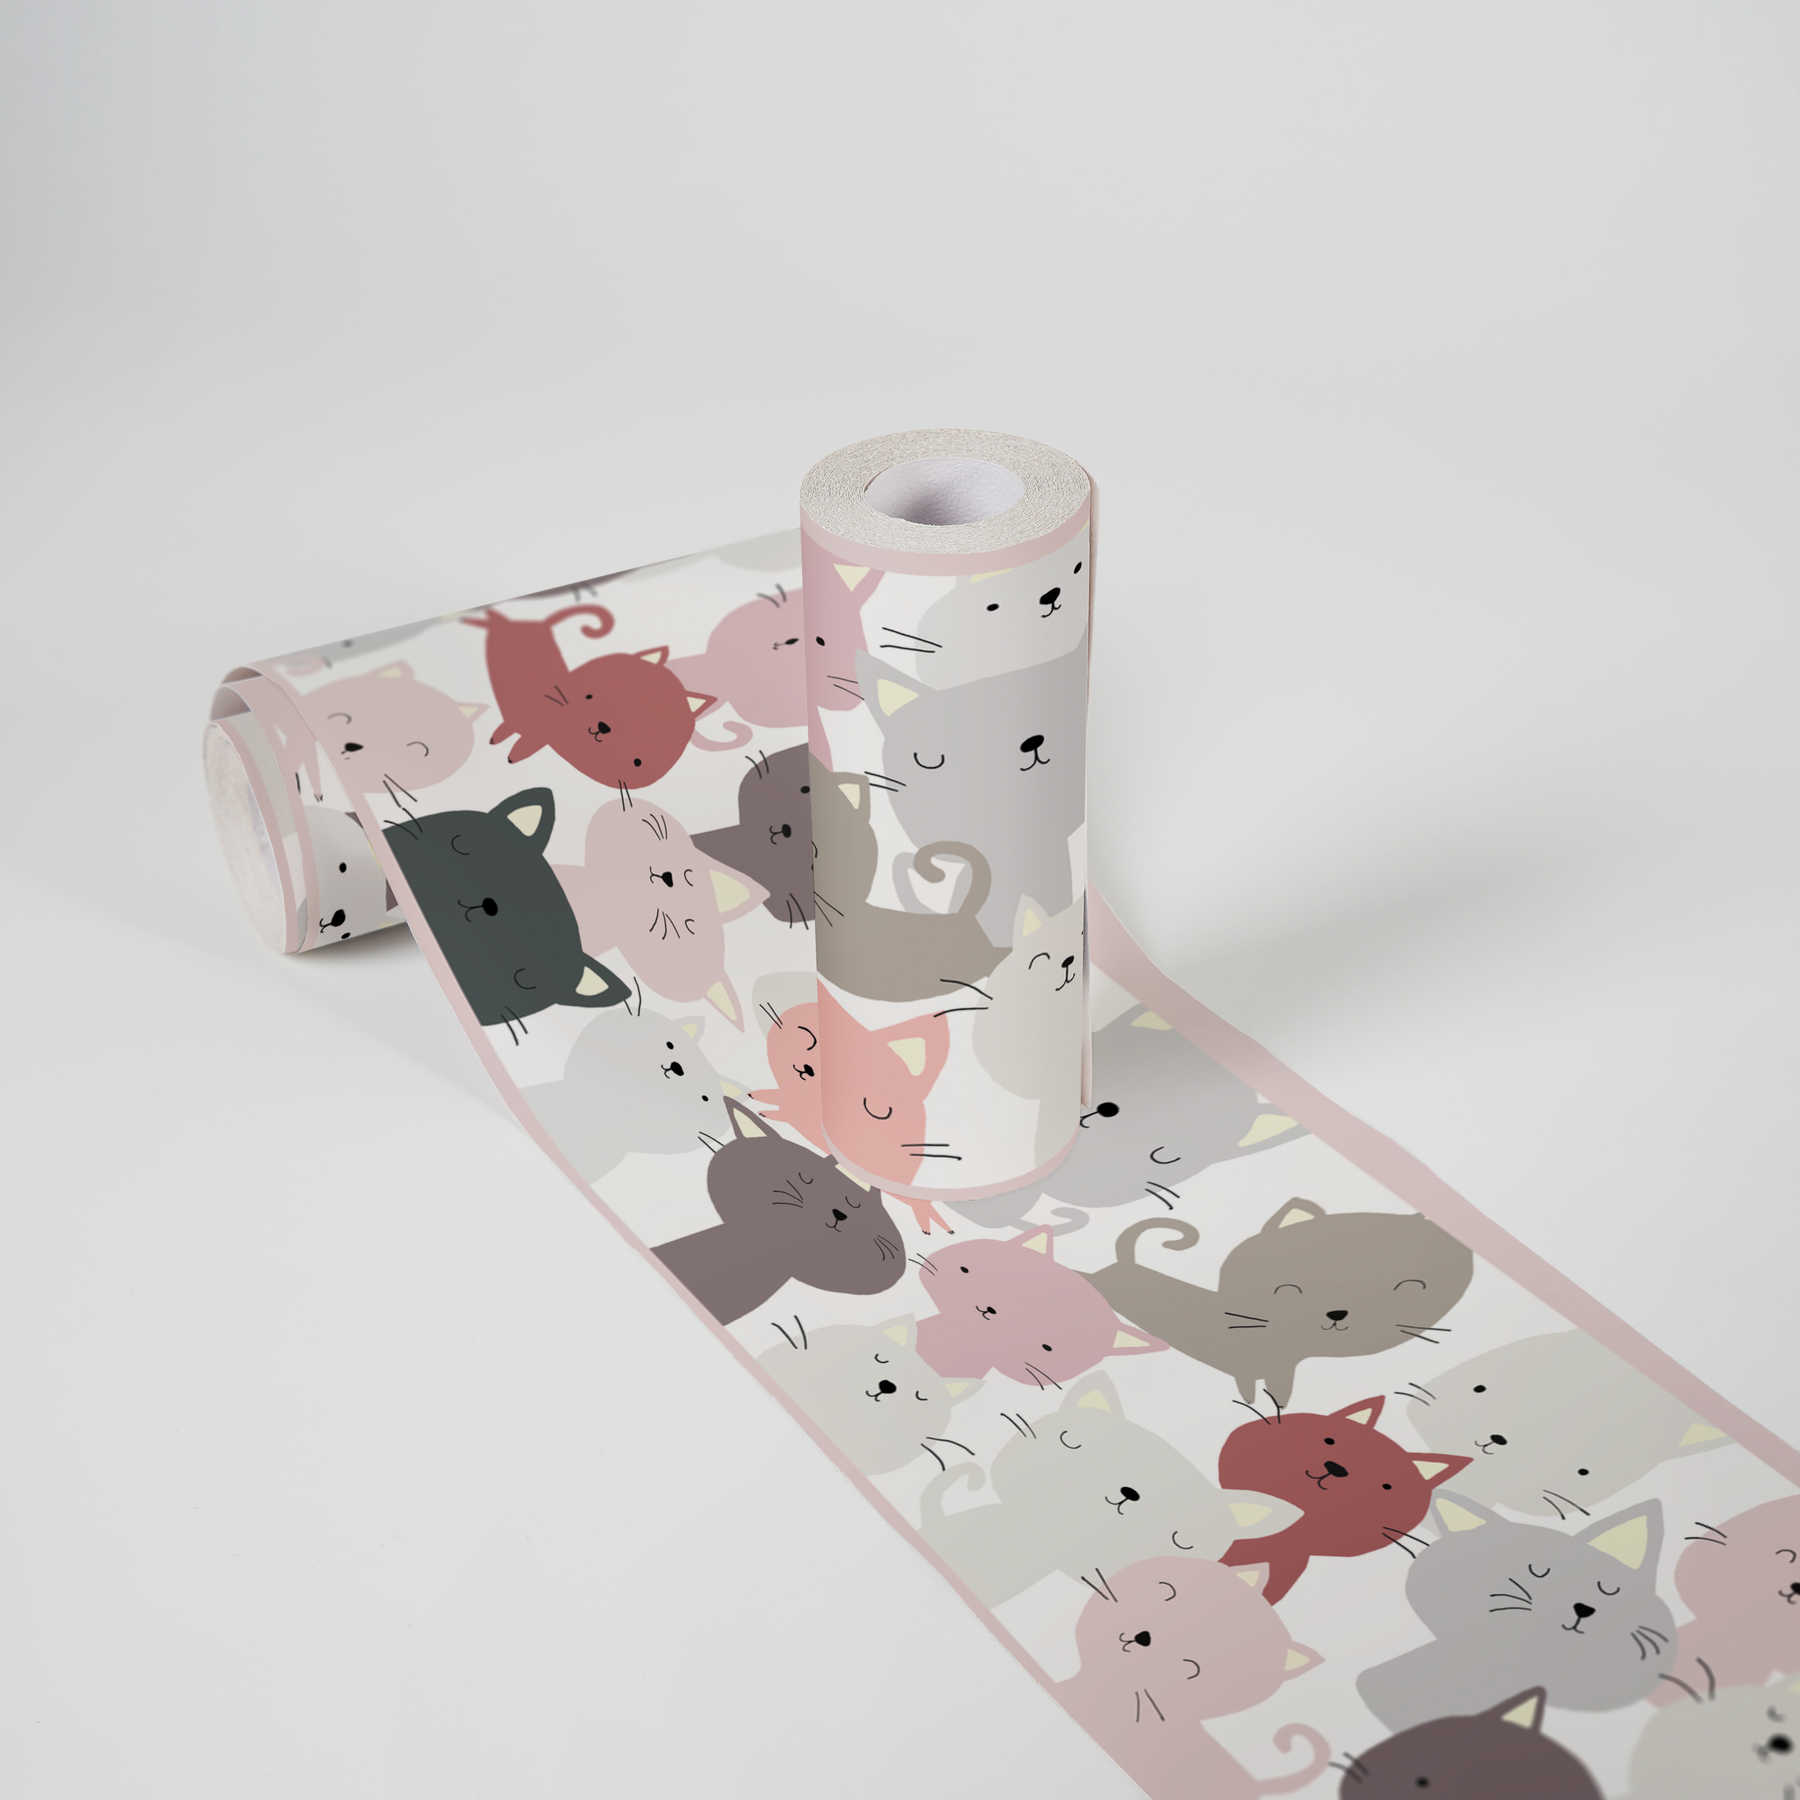             Girls wallpaper, self-adhesive border "Cat friends" - pink, grey, purple
        